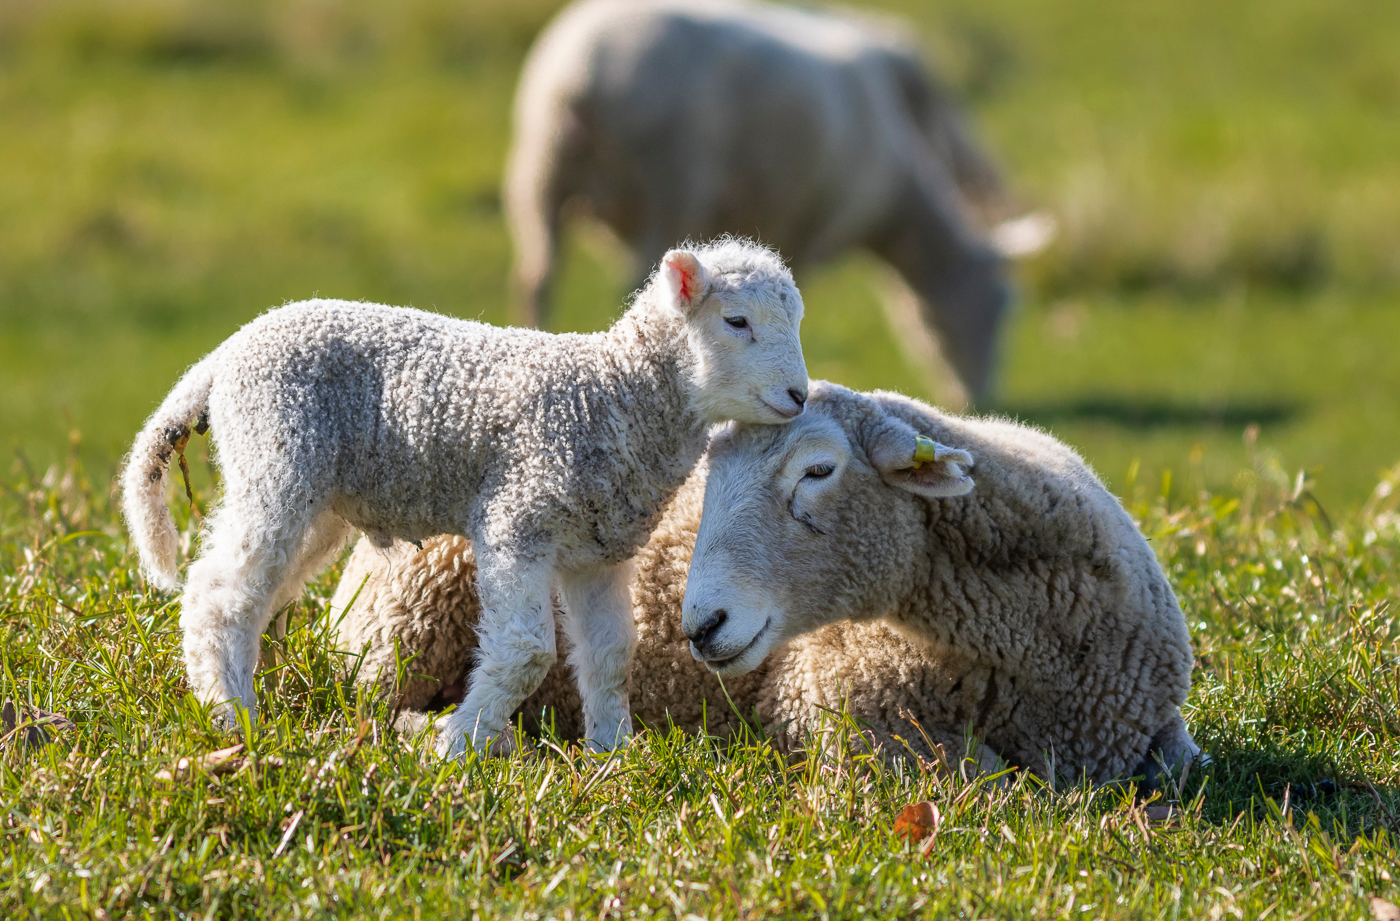 Ewe and her lamb